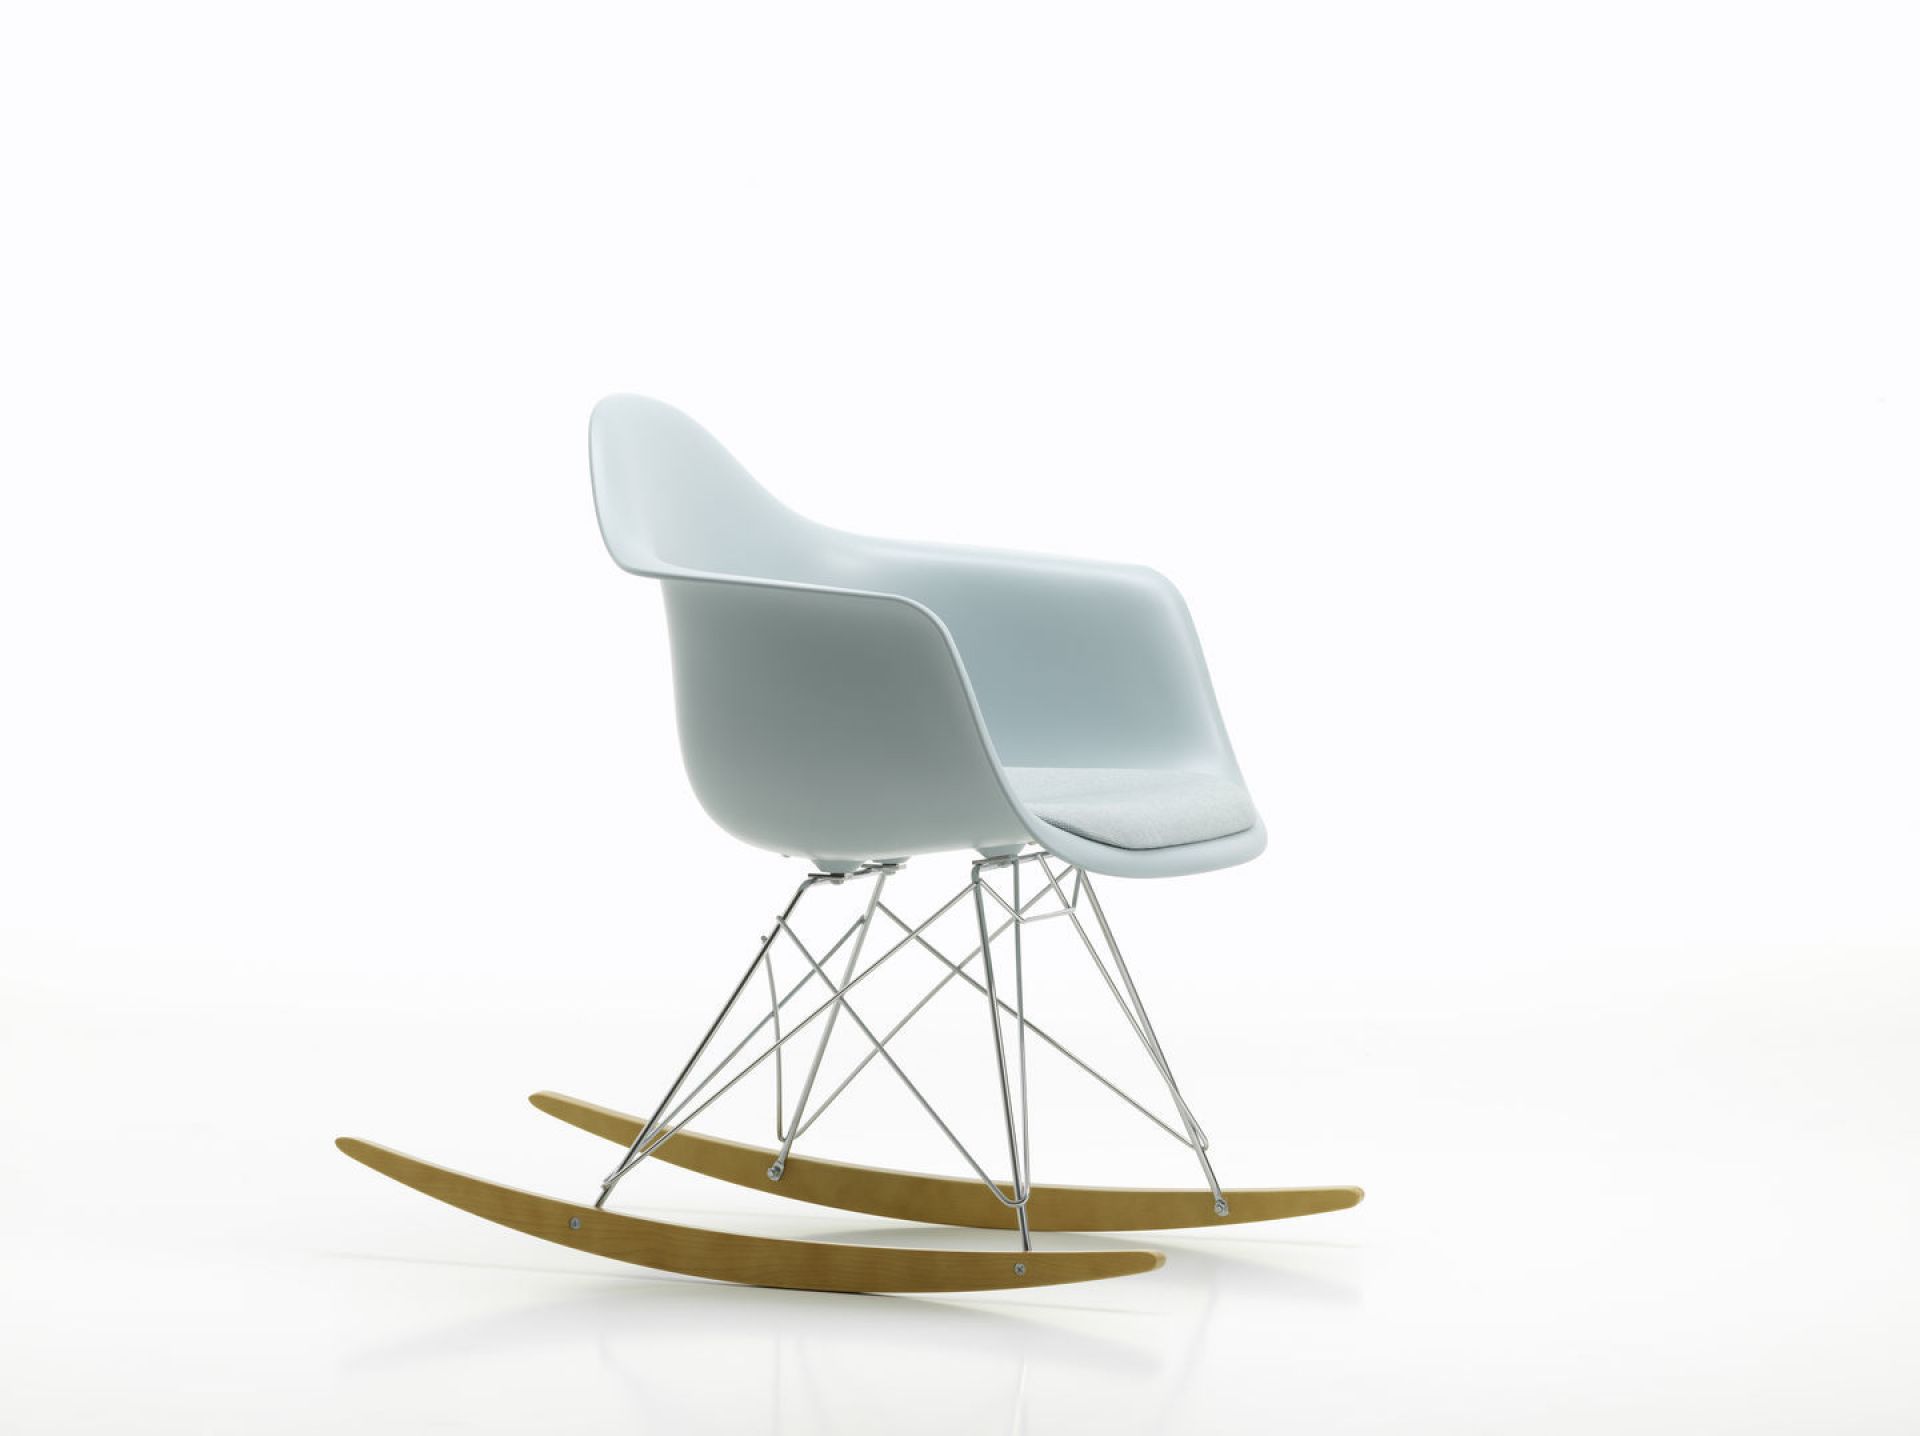 Eames Plastic Arm Rocking Chair Rar With Seat Cushion Vitra Vitra